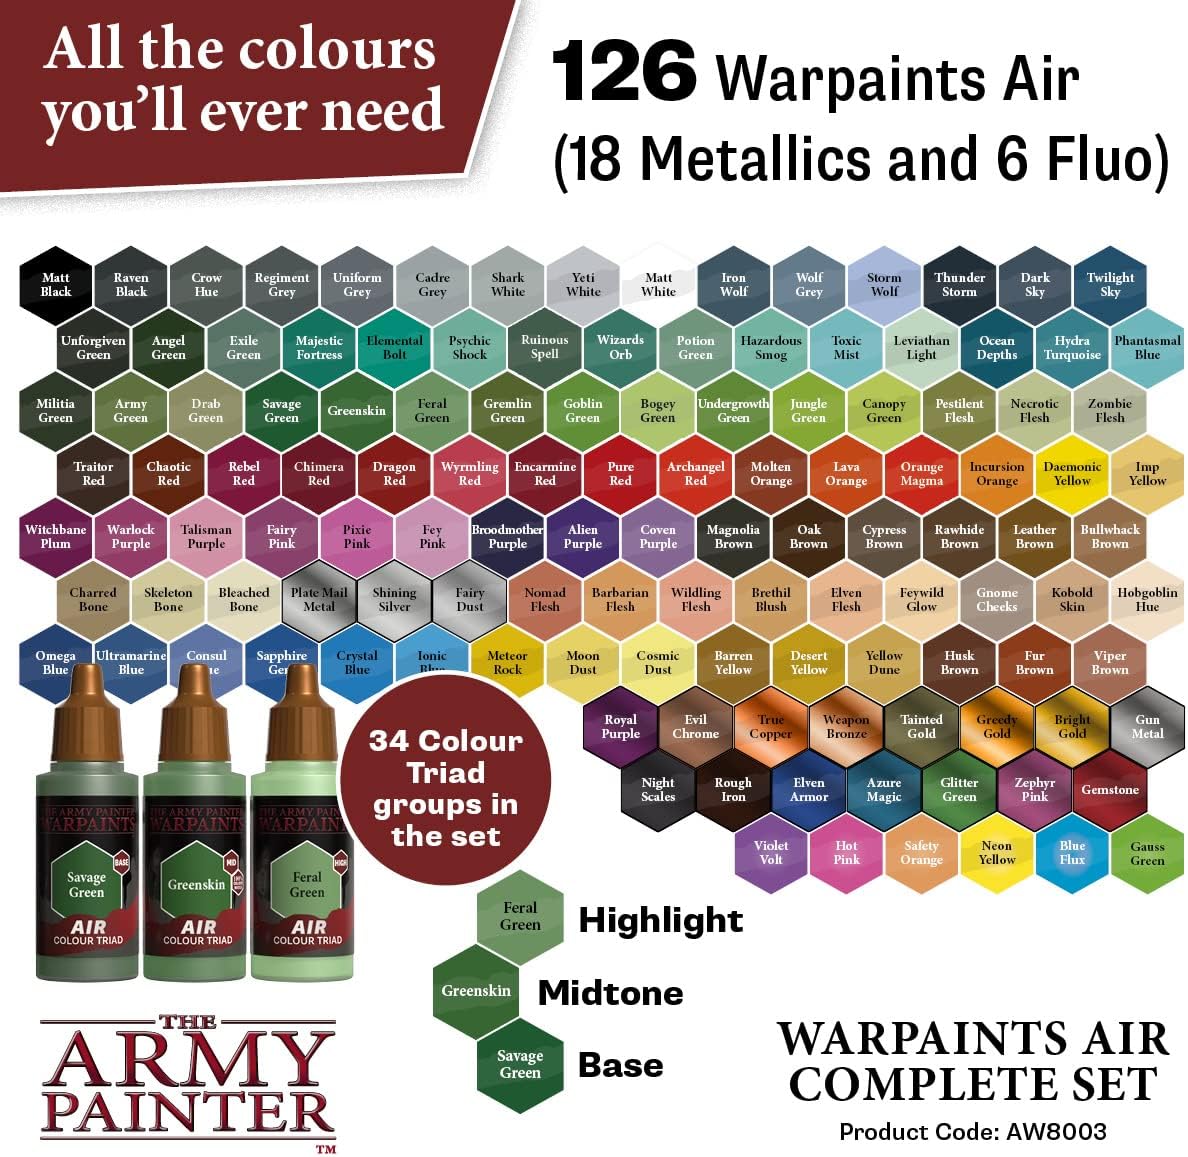 The Army Painter Warpaints Air Juego completo - Juego de 126 pinturas para aerógrafo a base de agua no tóxicas - Pintura en miniatura para juegos de rol de mesa, juegos de mesa y juegos de guerra Pintura de modelos en miniatura